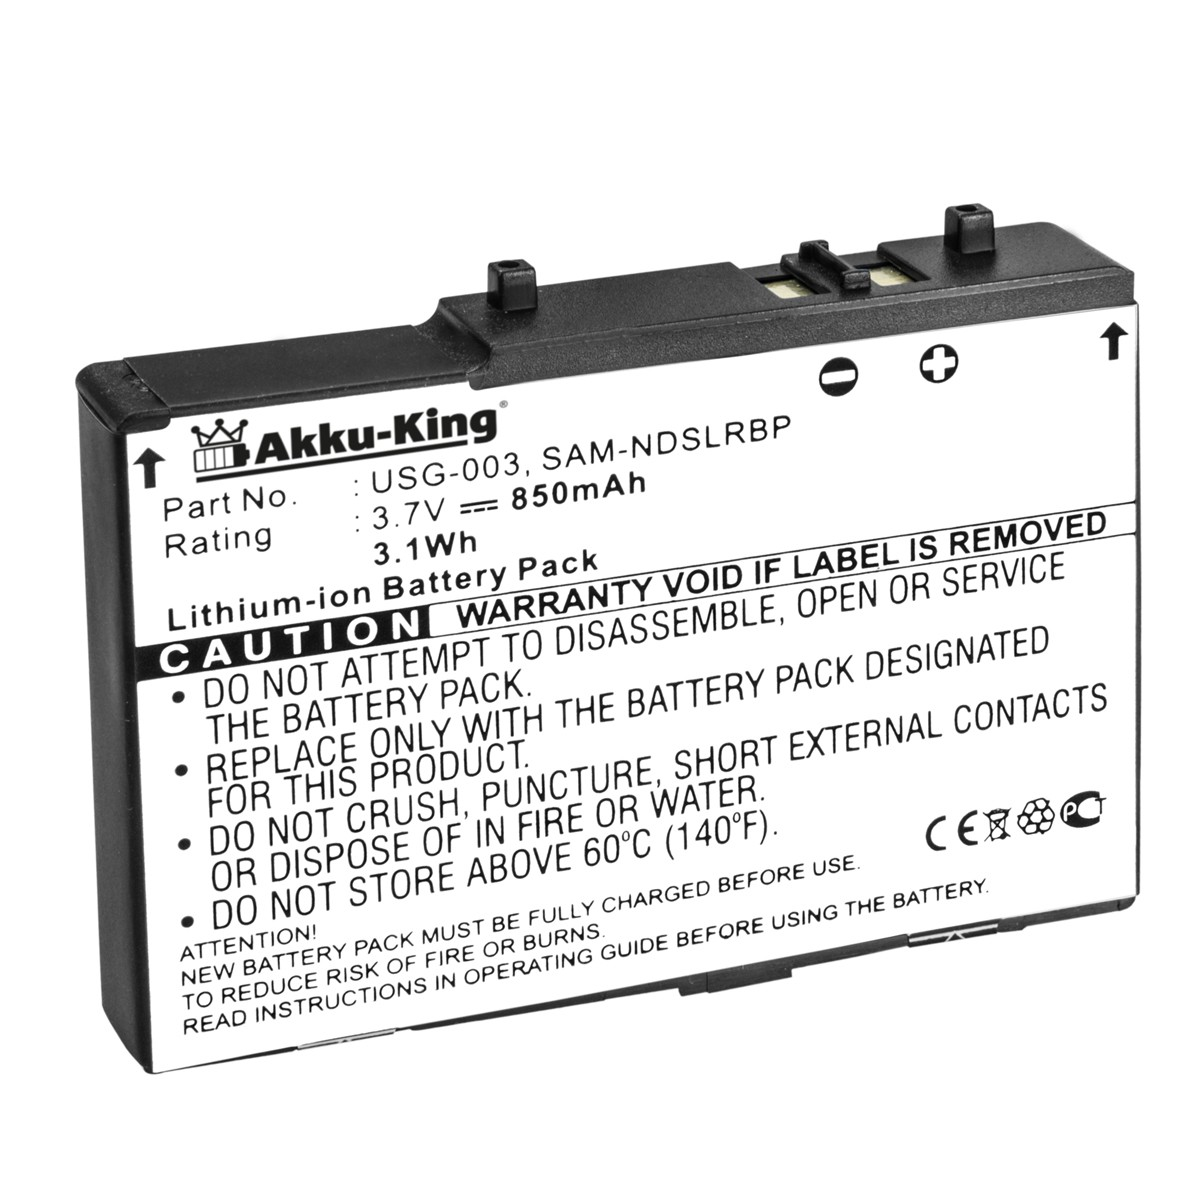 Nintendo kompatibel mit Li-Ion USG-003 3.7 AKKU-KING Akku 850mAh Geräte-Akku, Volt,